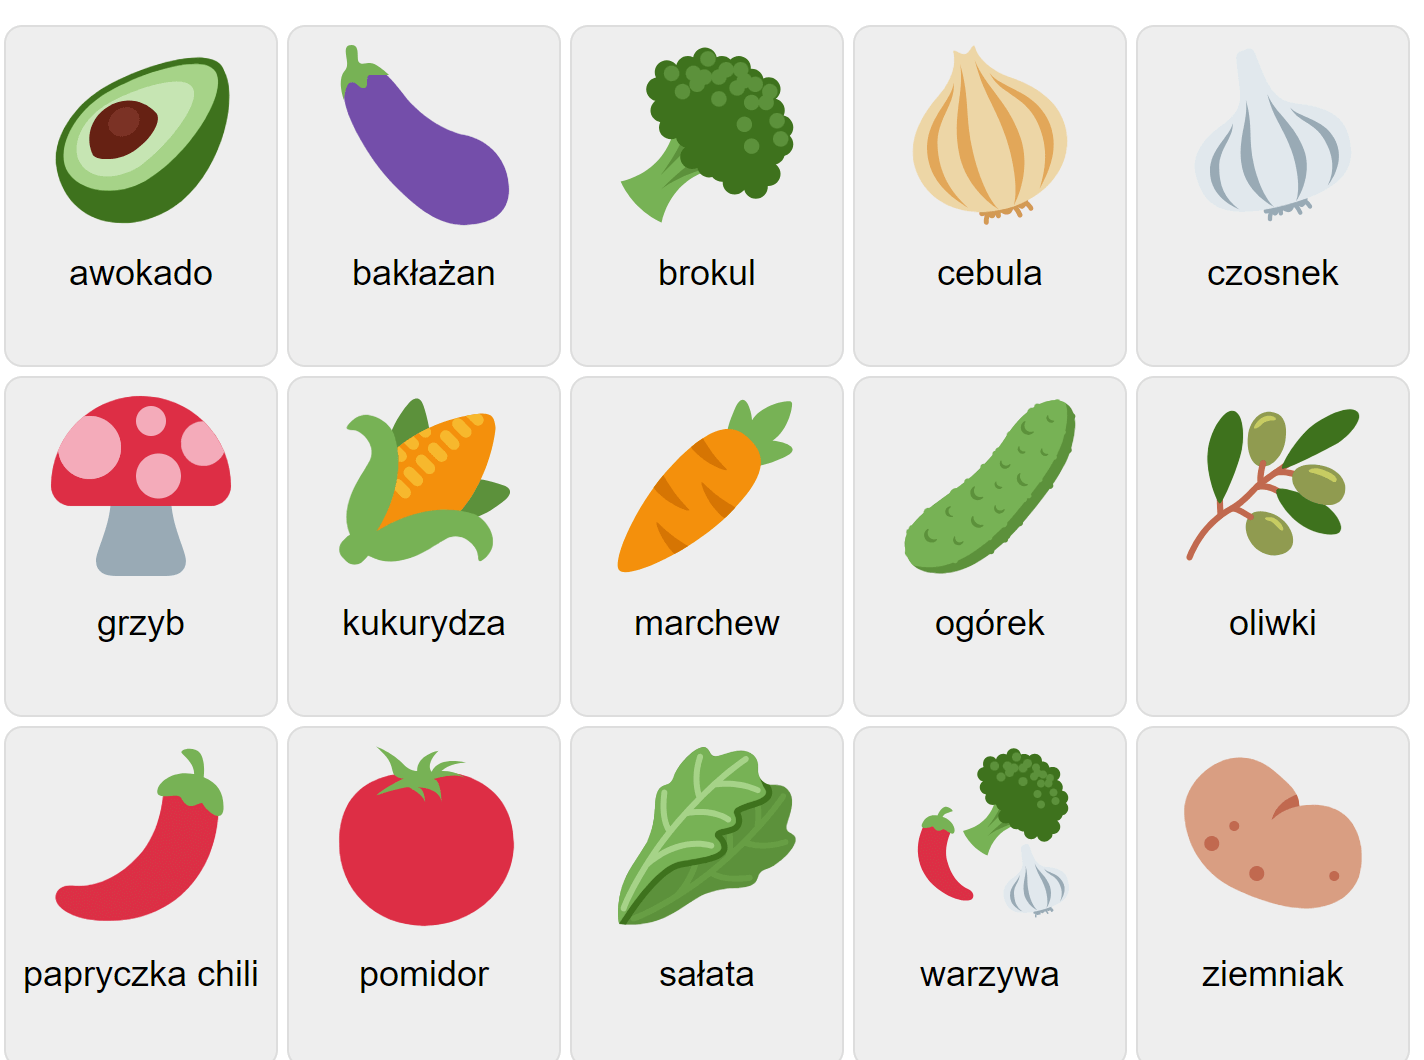 Vegetables in Polish